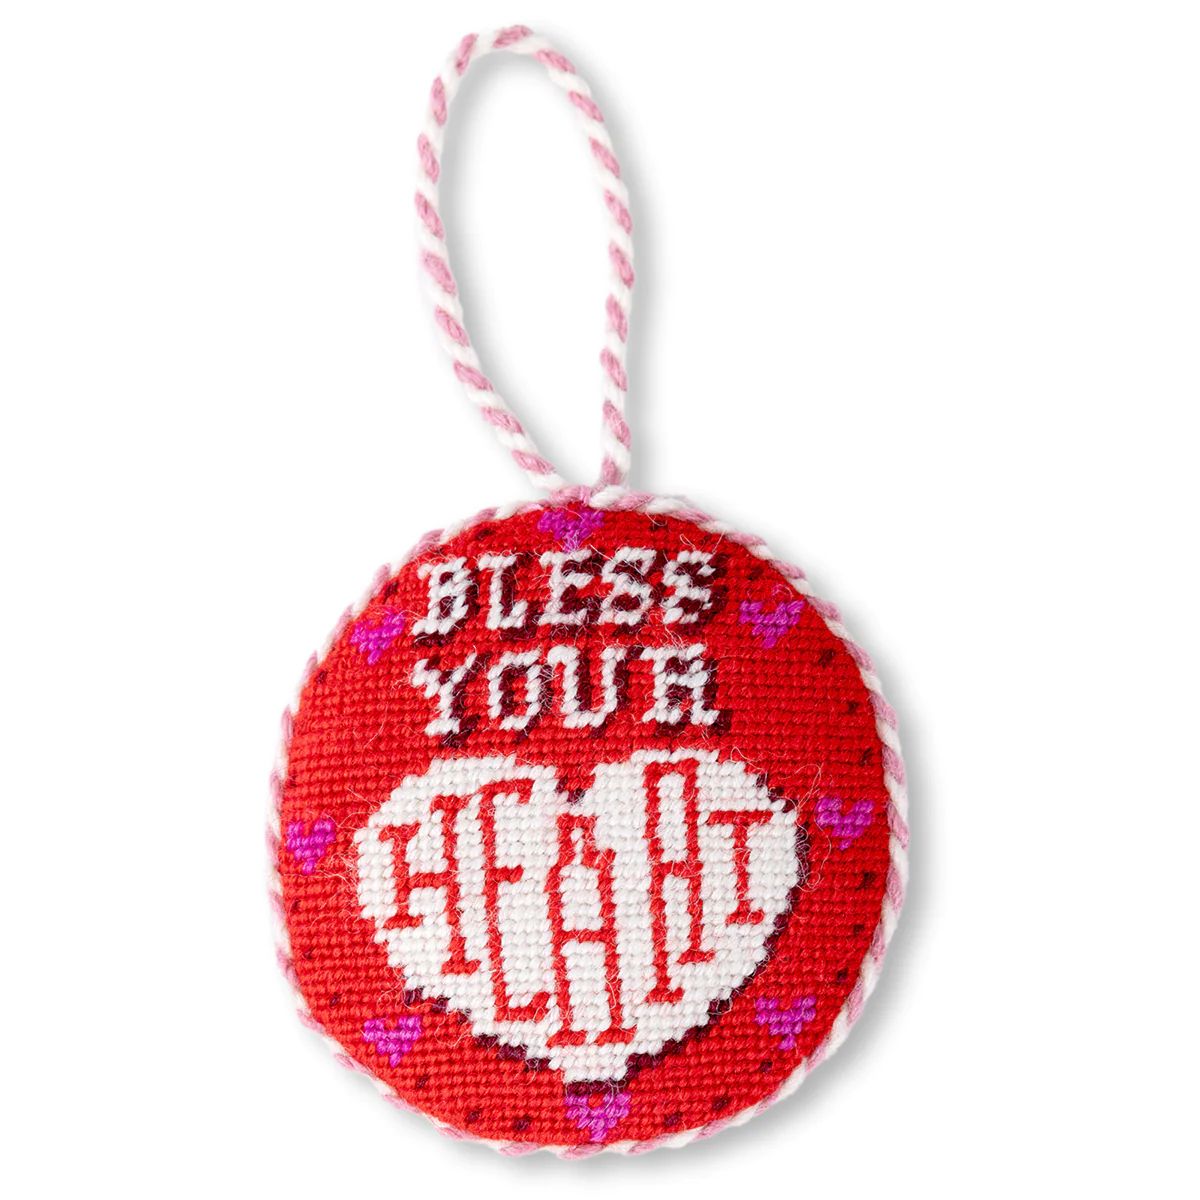 Furbish Studio - Bless Your Heart Needlepoint Ornament | Furbish Studio